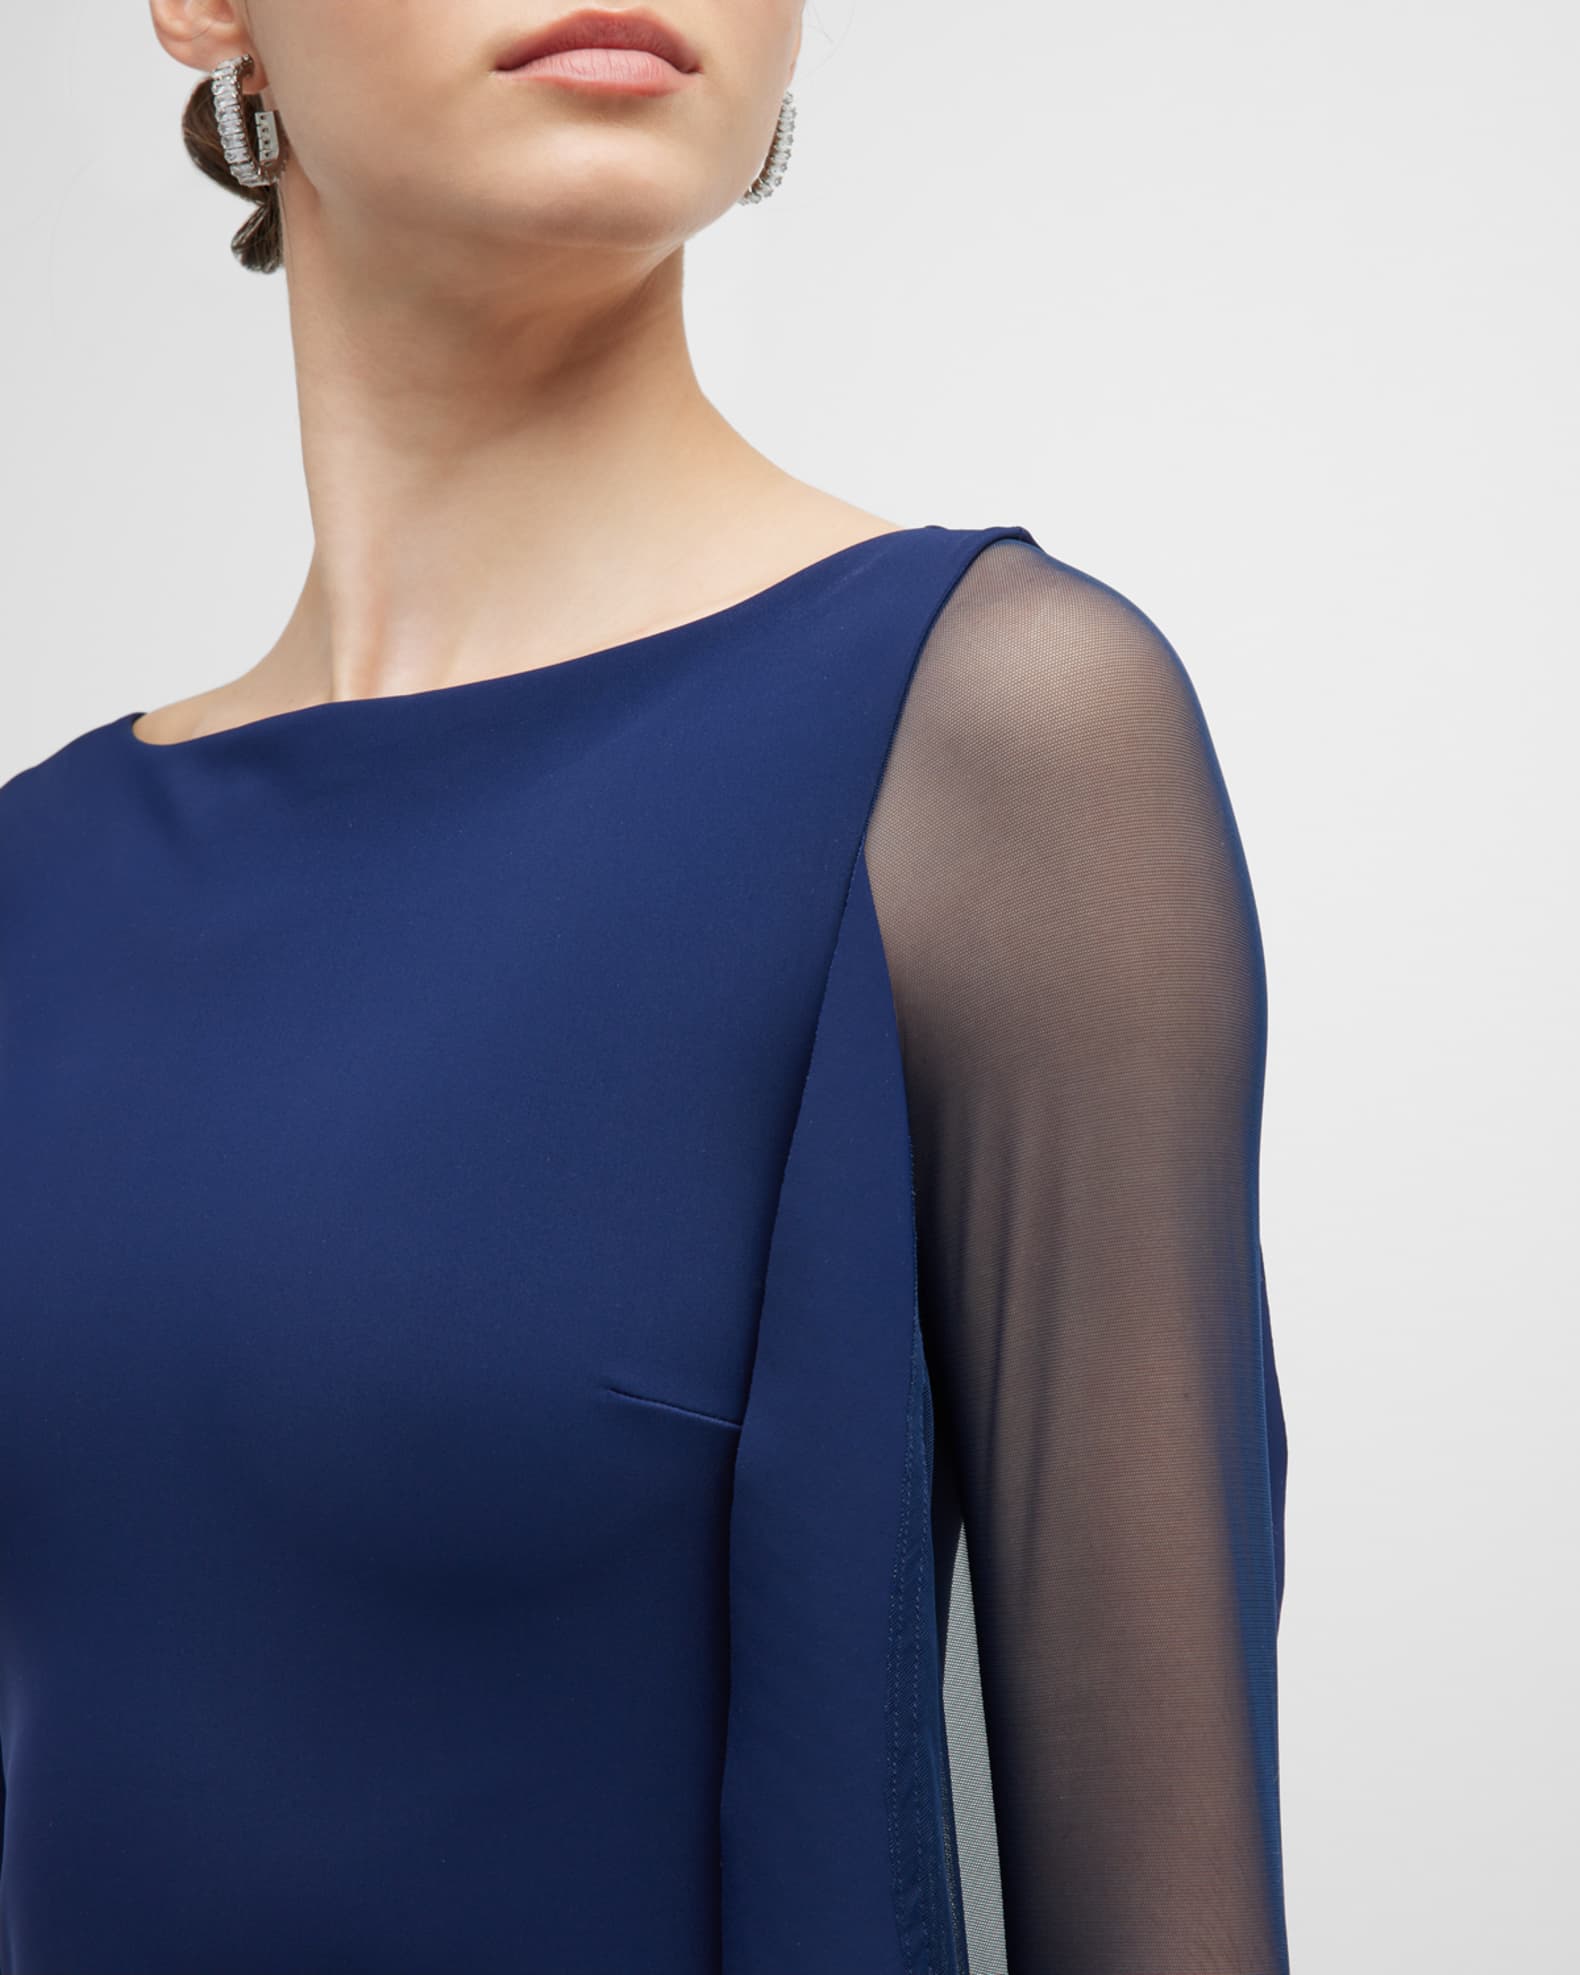 Chiara Boni La Petite Robe Kacey Illusion-Sleeve Cape Gown | Neiman Marcus